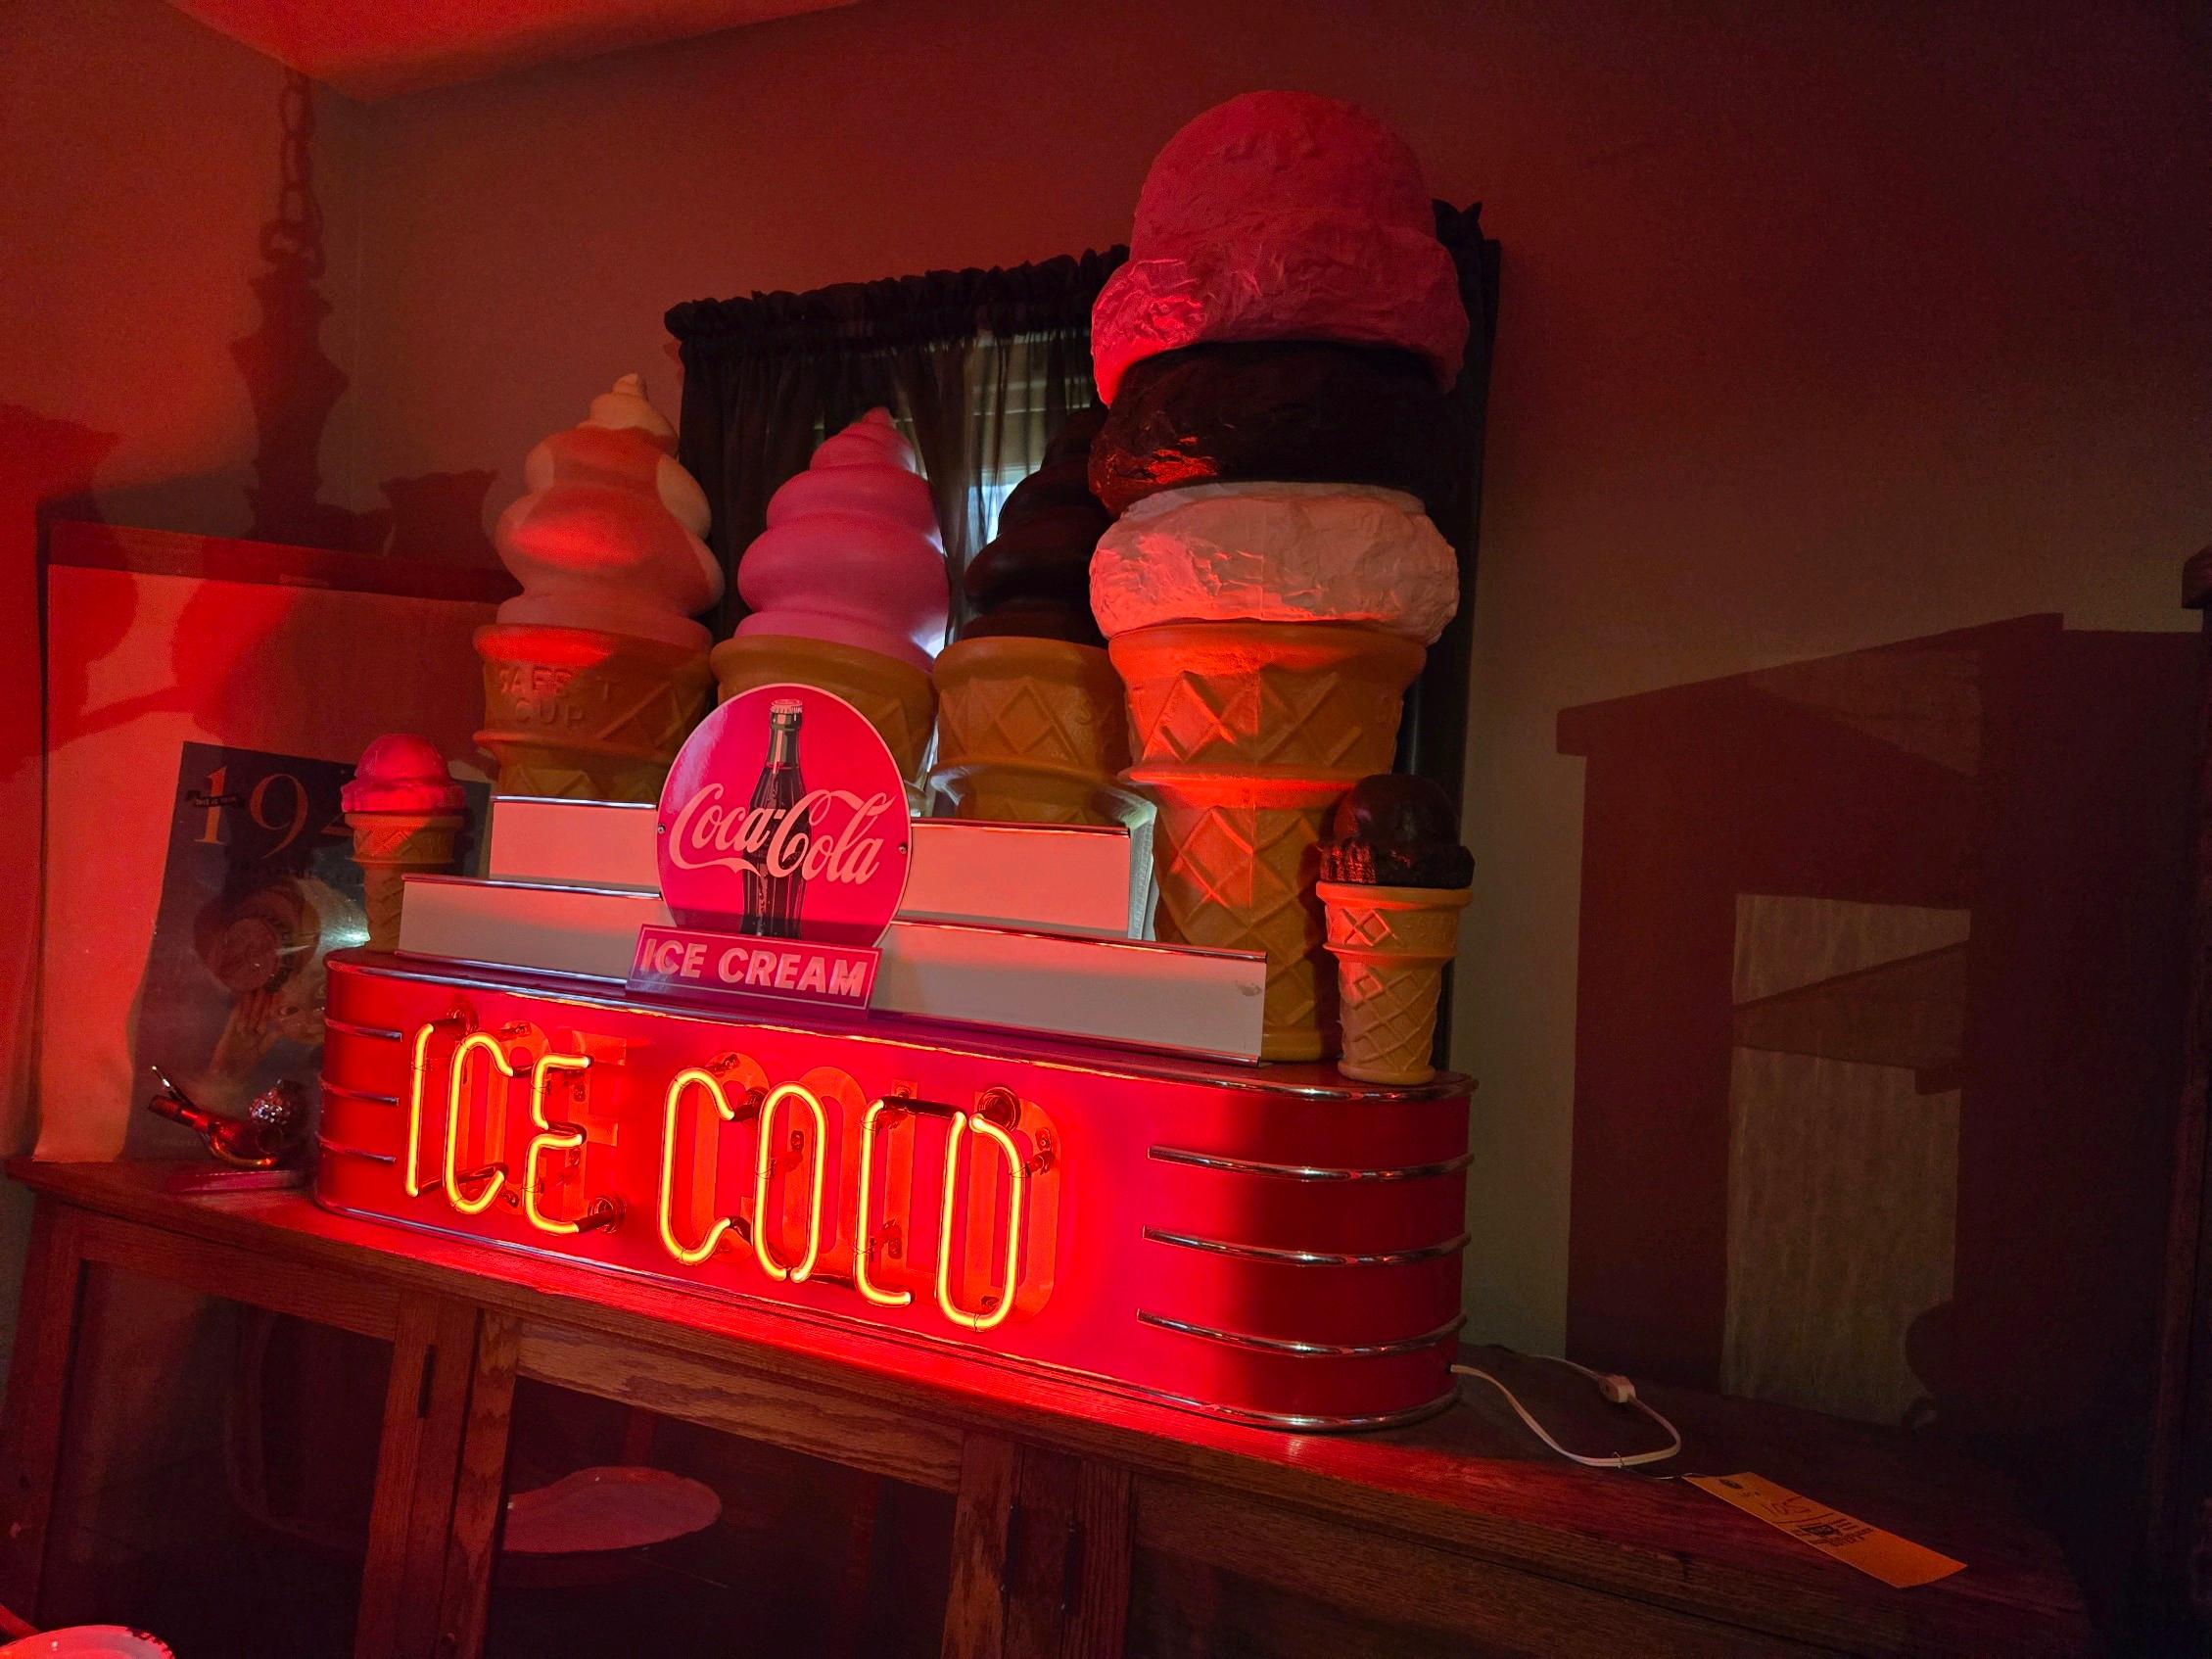 Neon Coca Cola Display & Plastic Ice Cream Cones